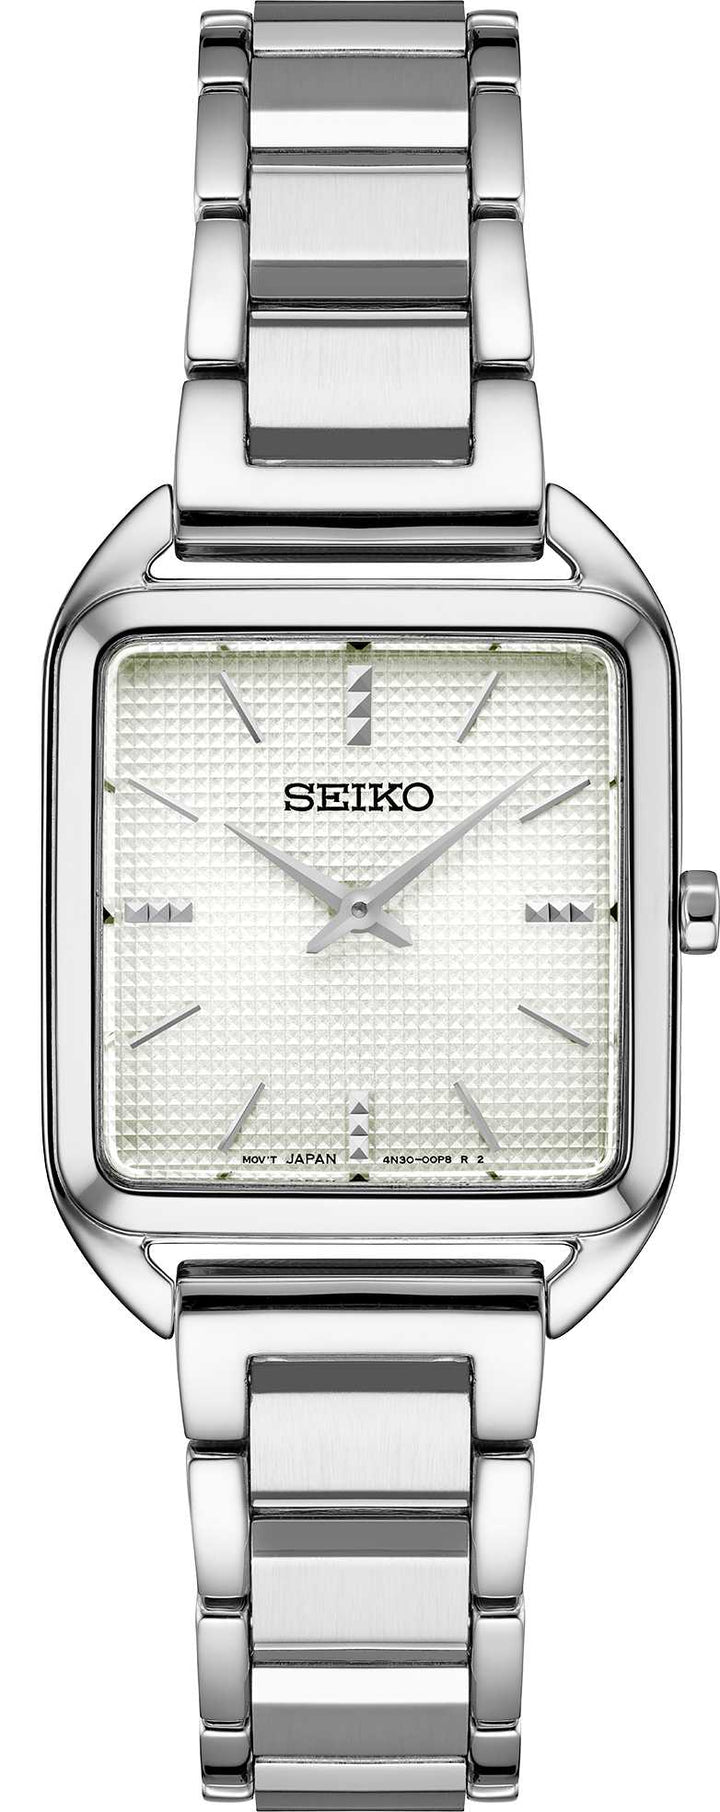 Seiko SWR073 Watch Technicians Store